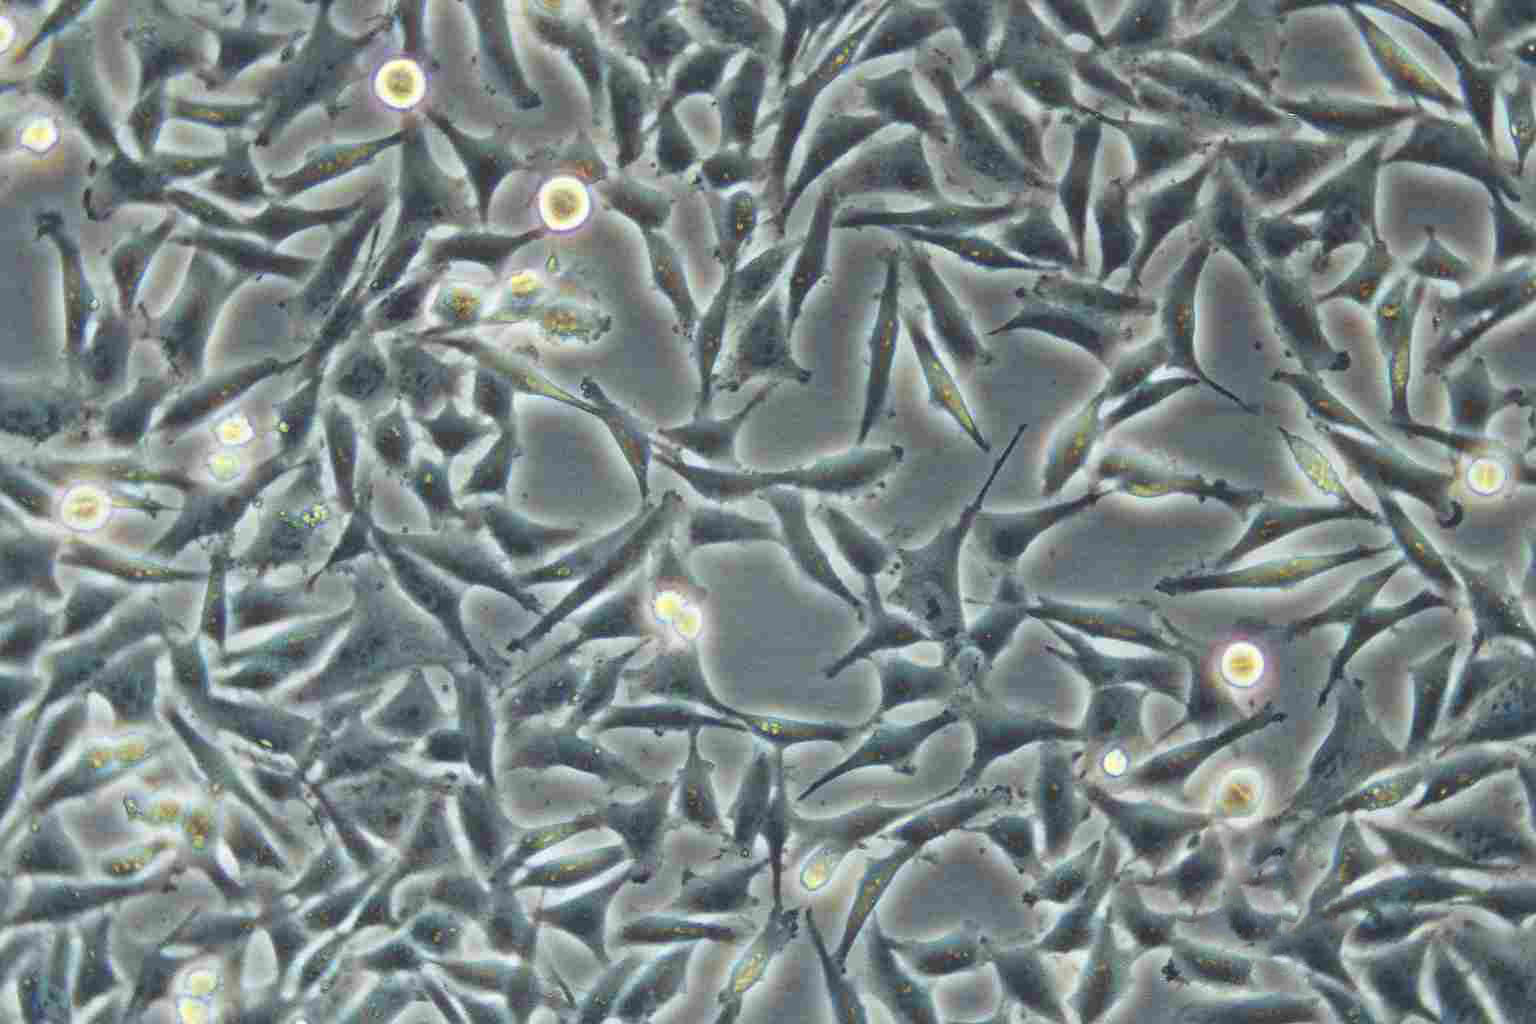 SNU-638 epithelioid cells人胃癌细胞系